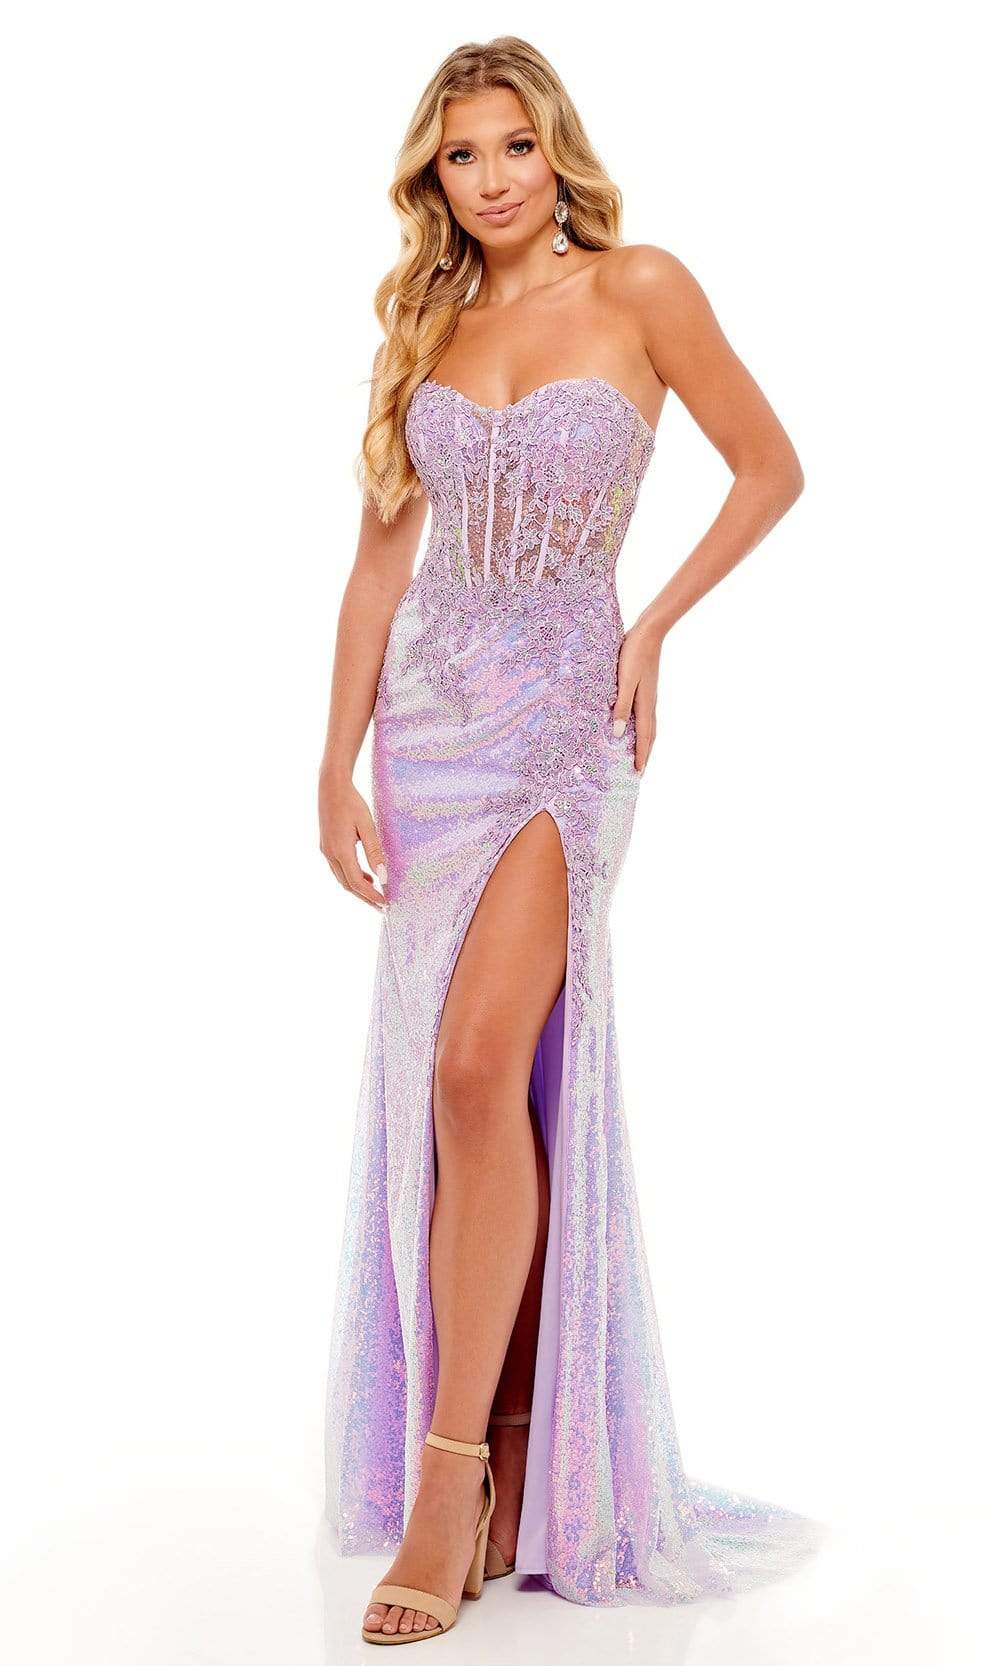 Rachel Allan - 70132 Sweetheart Fitted Sequin Dress Prom Dresses